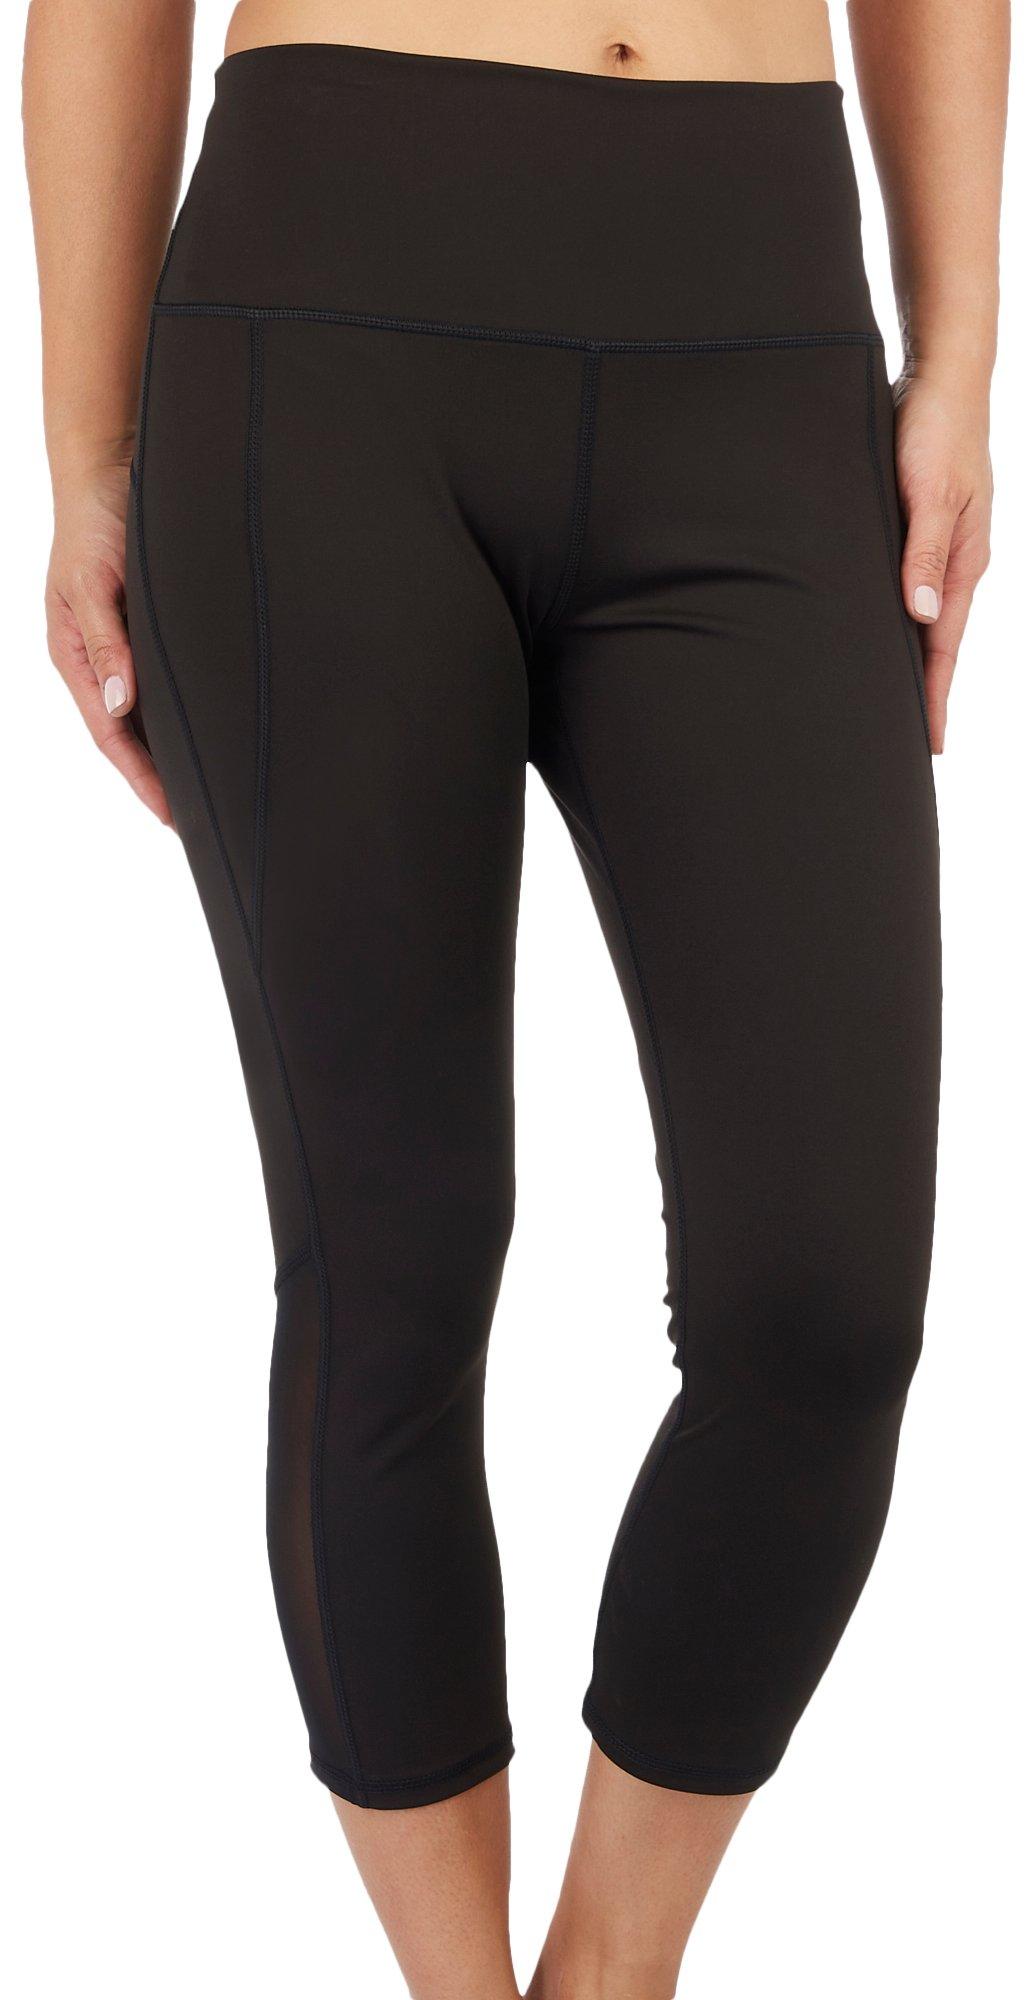 Vogo Athletics Women's leggings Gray/Black Striped Mesh Sides Size Large